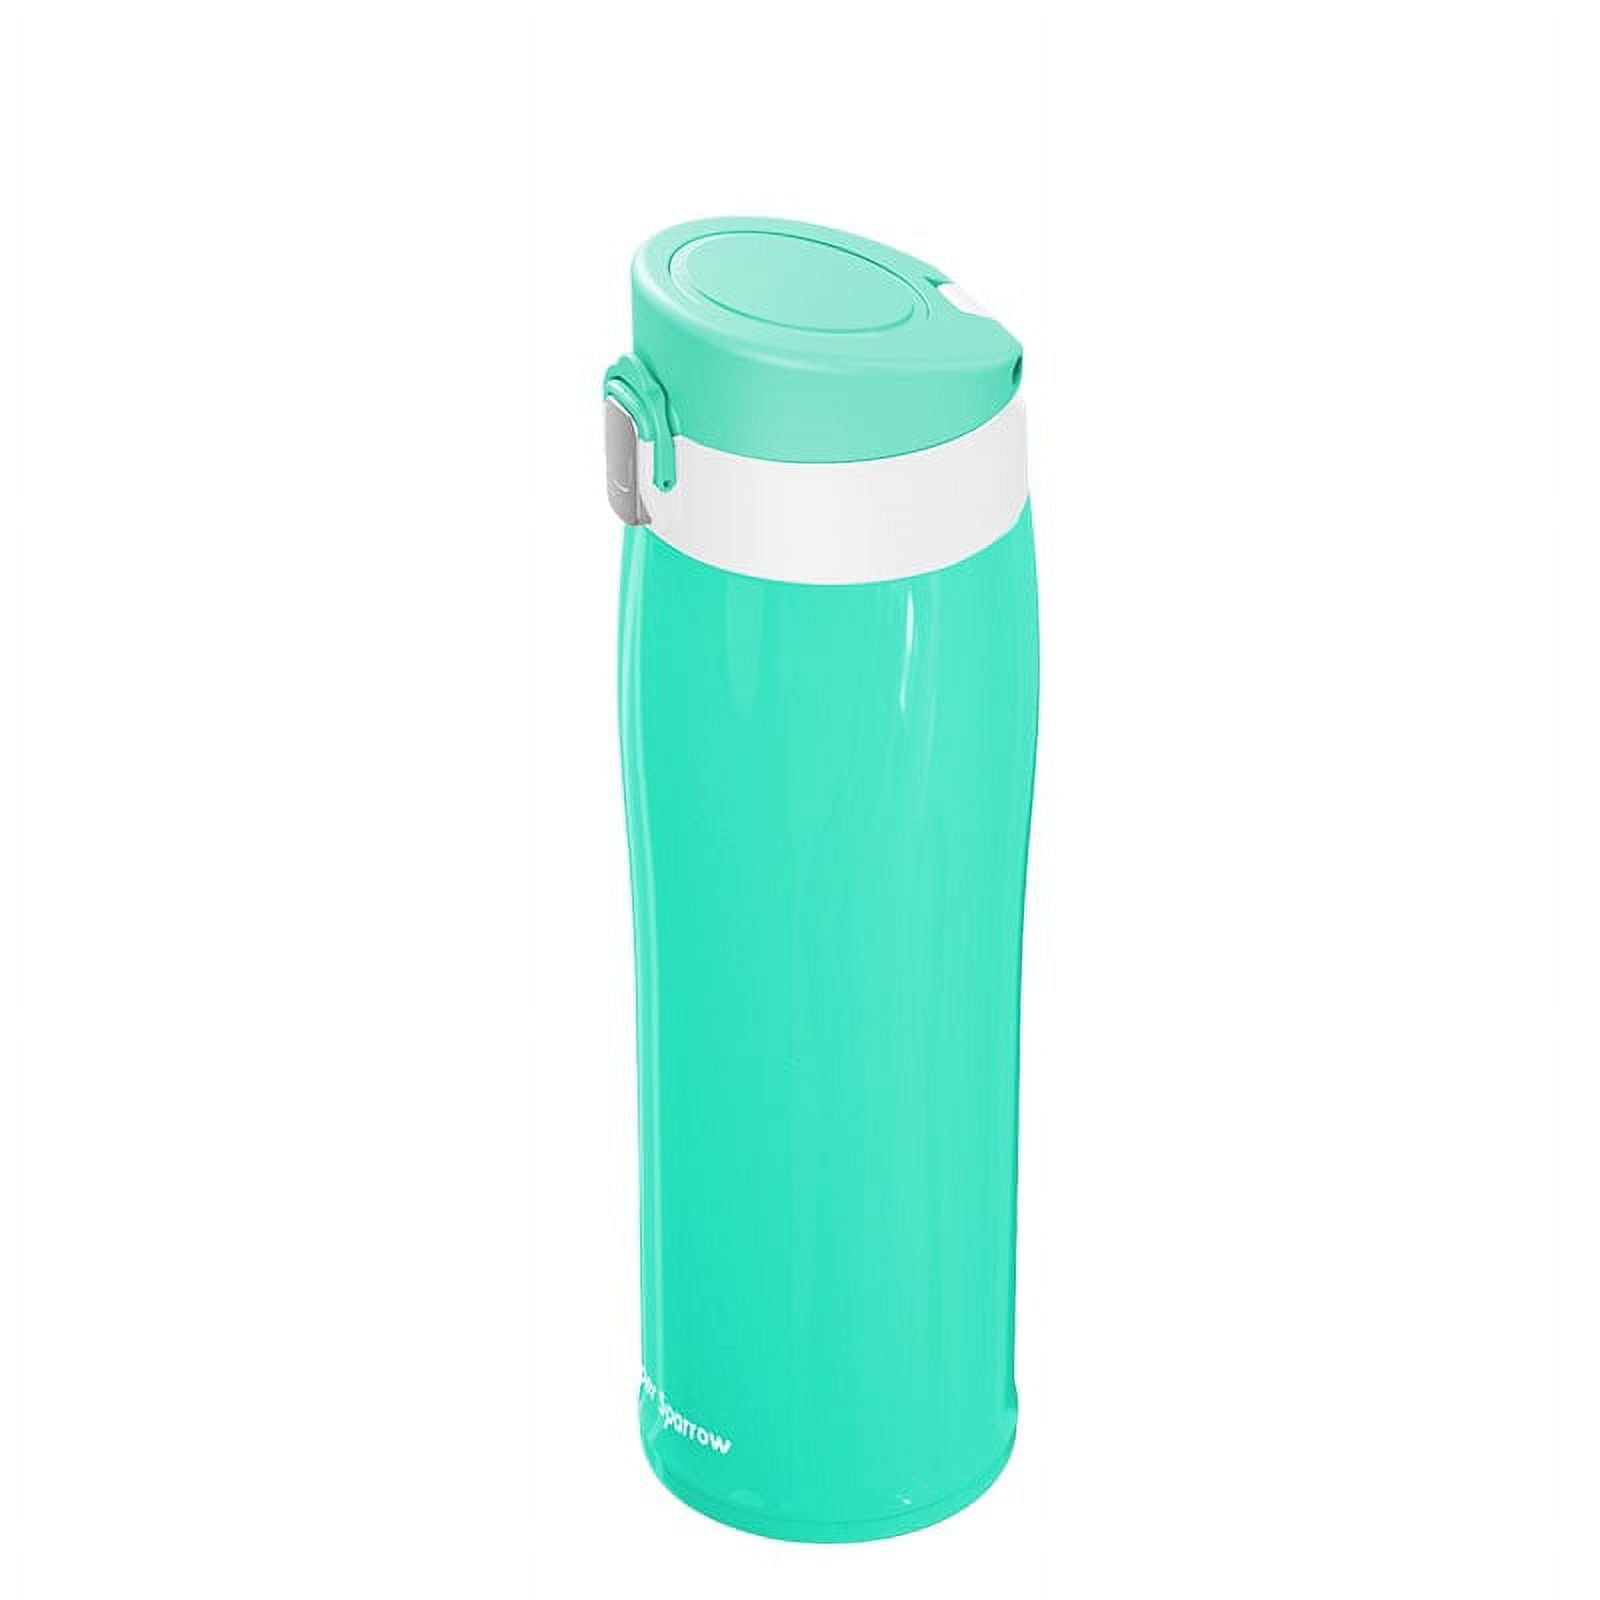  Super Sparrow｜BERLIN-MARATHON Customized Version Water Bottle  Stainless Steel 18/10 - Ultralight Travel Mug, Insulated Metal Water Bottle  17oz, BPA Free & Leak Proof Drinks Bottle : Sports & Outdoors